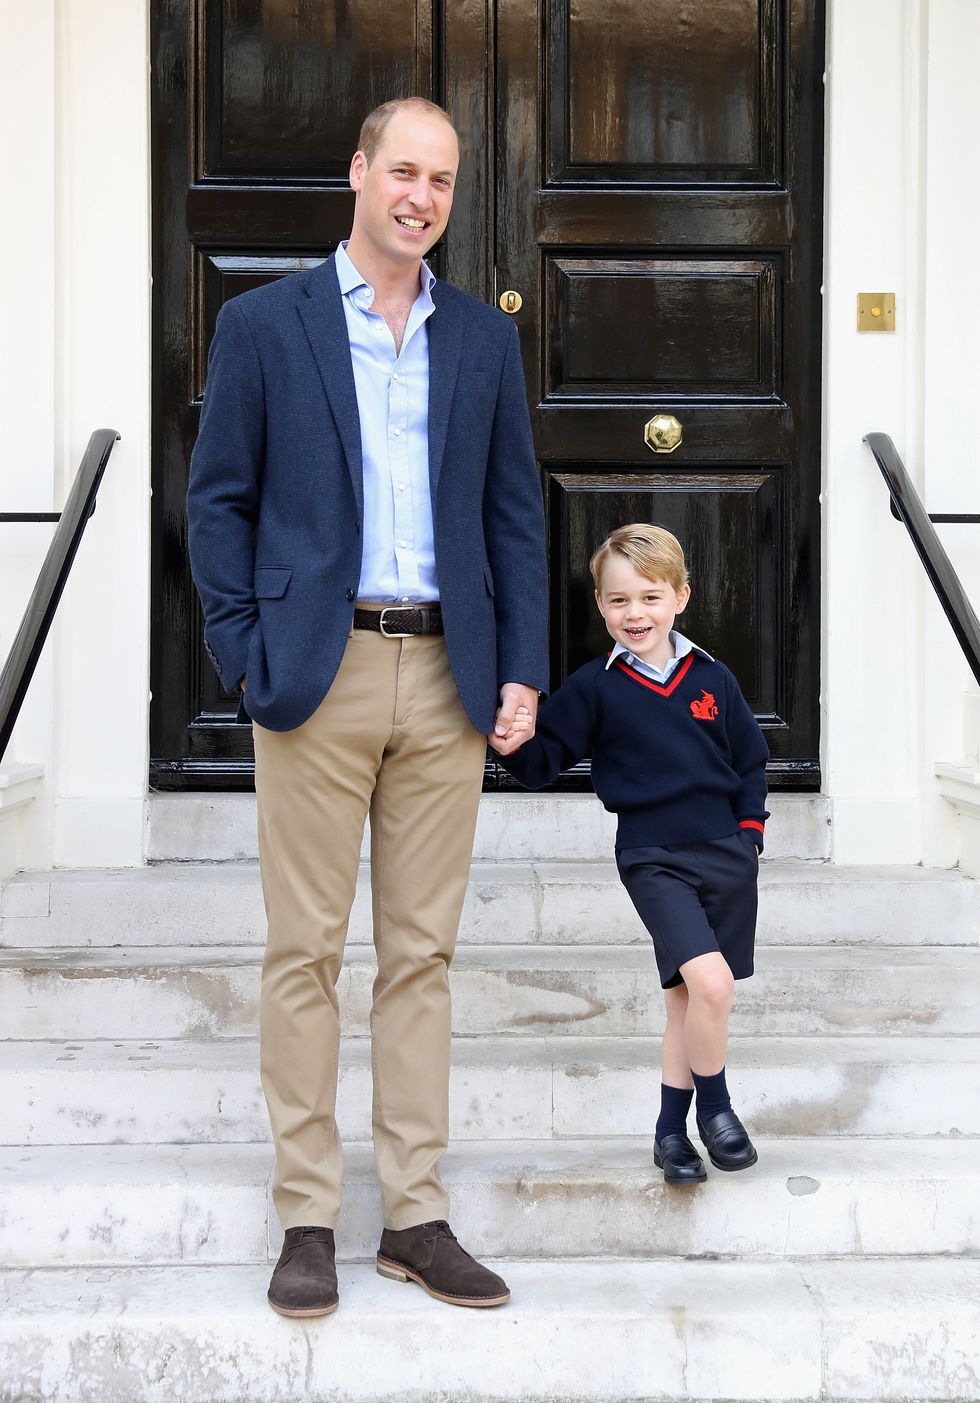 Prince George started school in September 2017